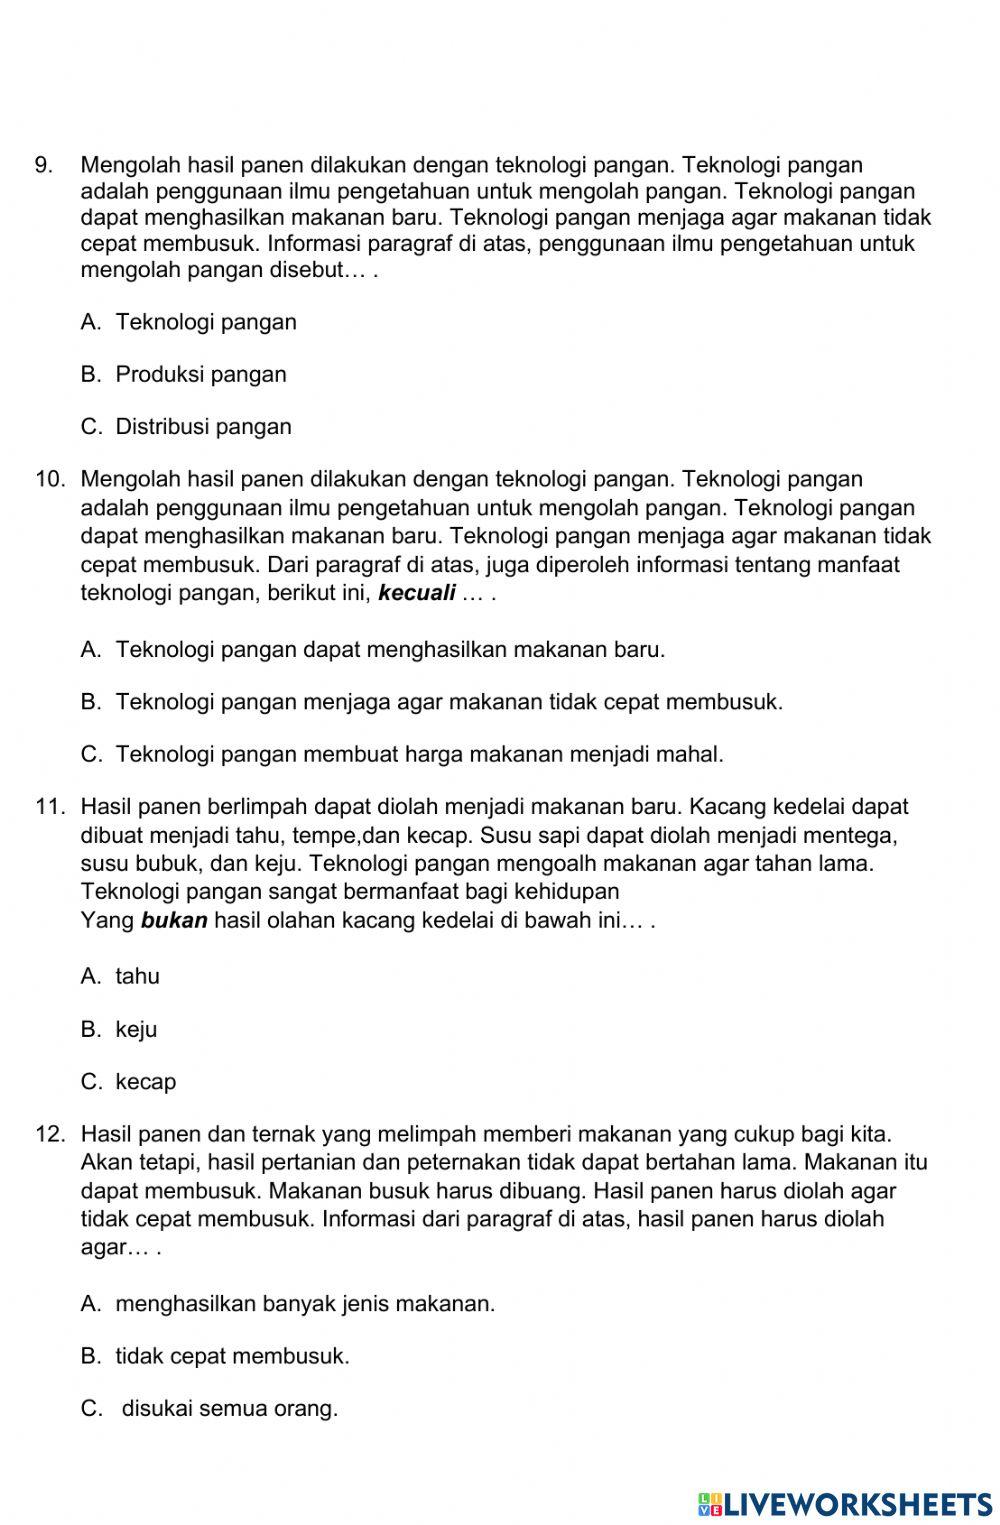 Latihan bahasa indonesia t7 st1